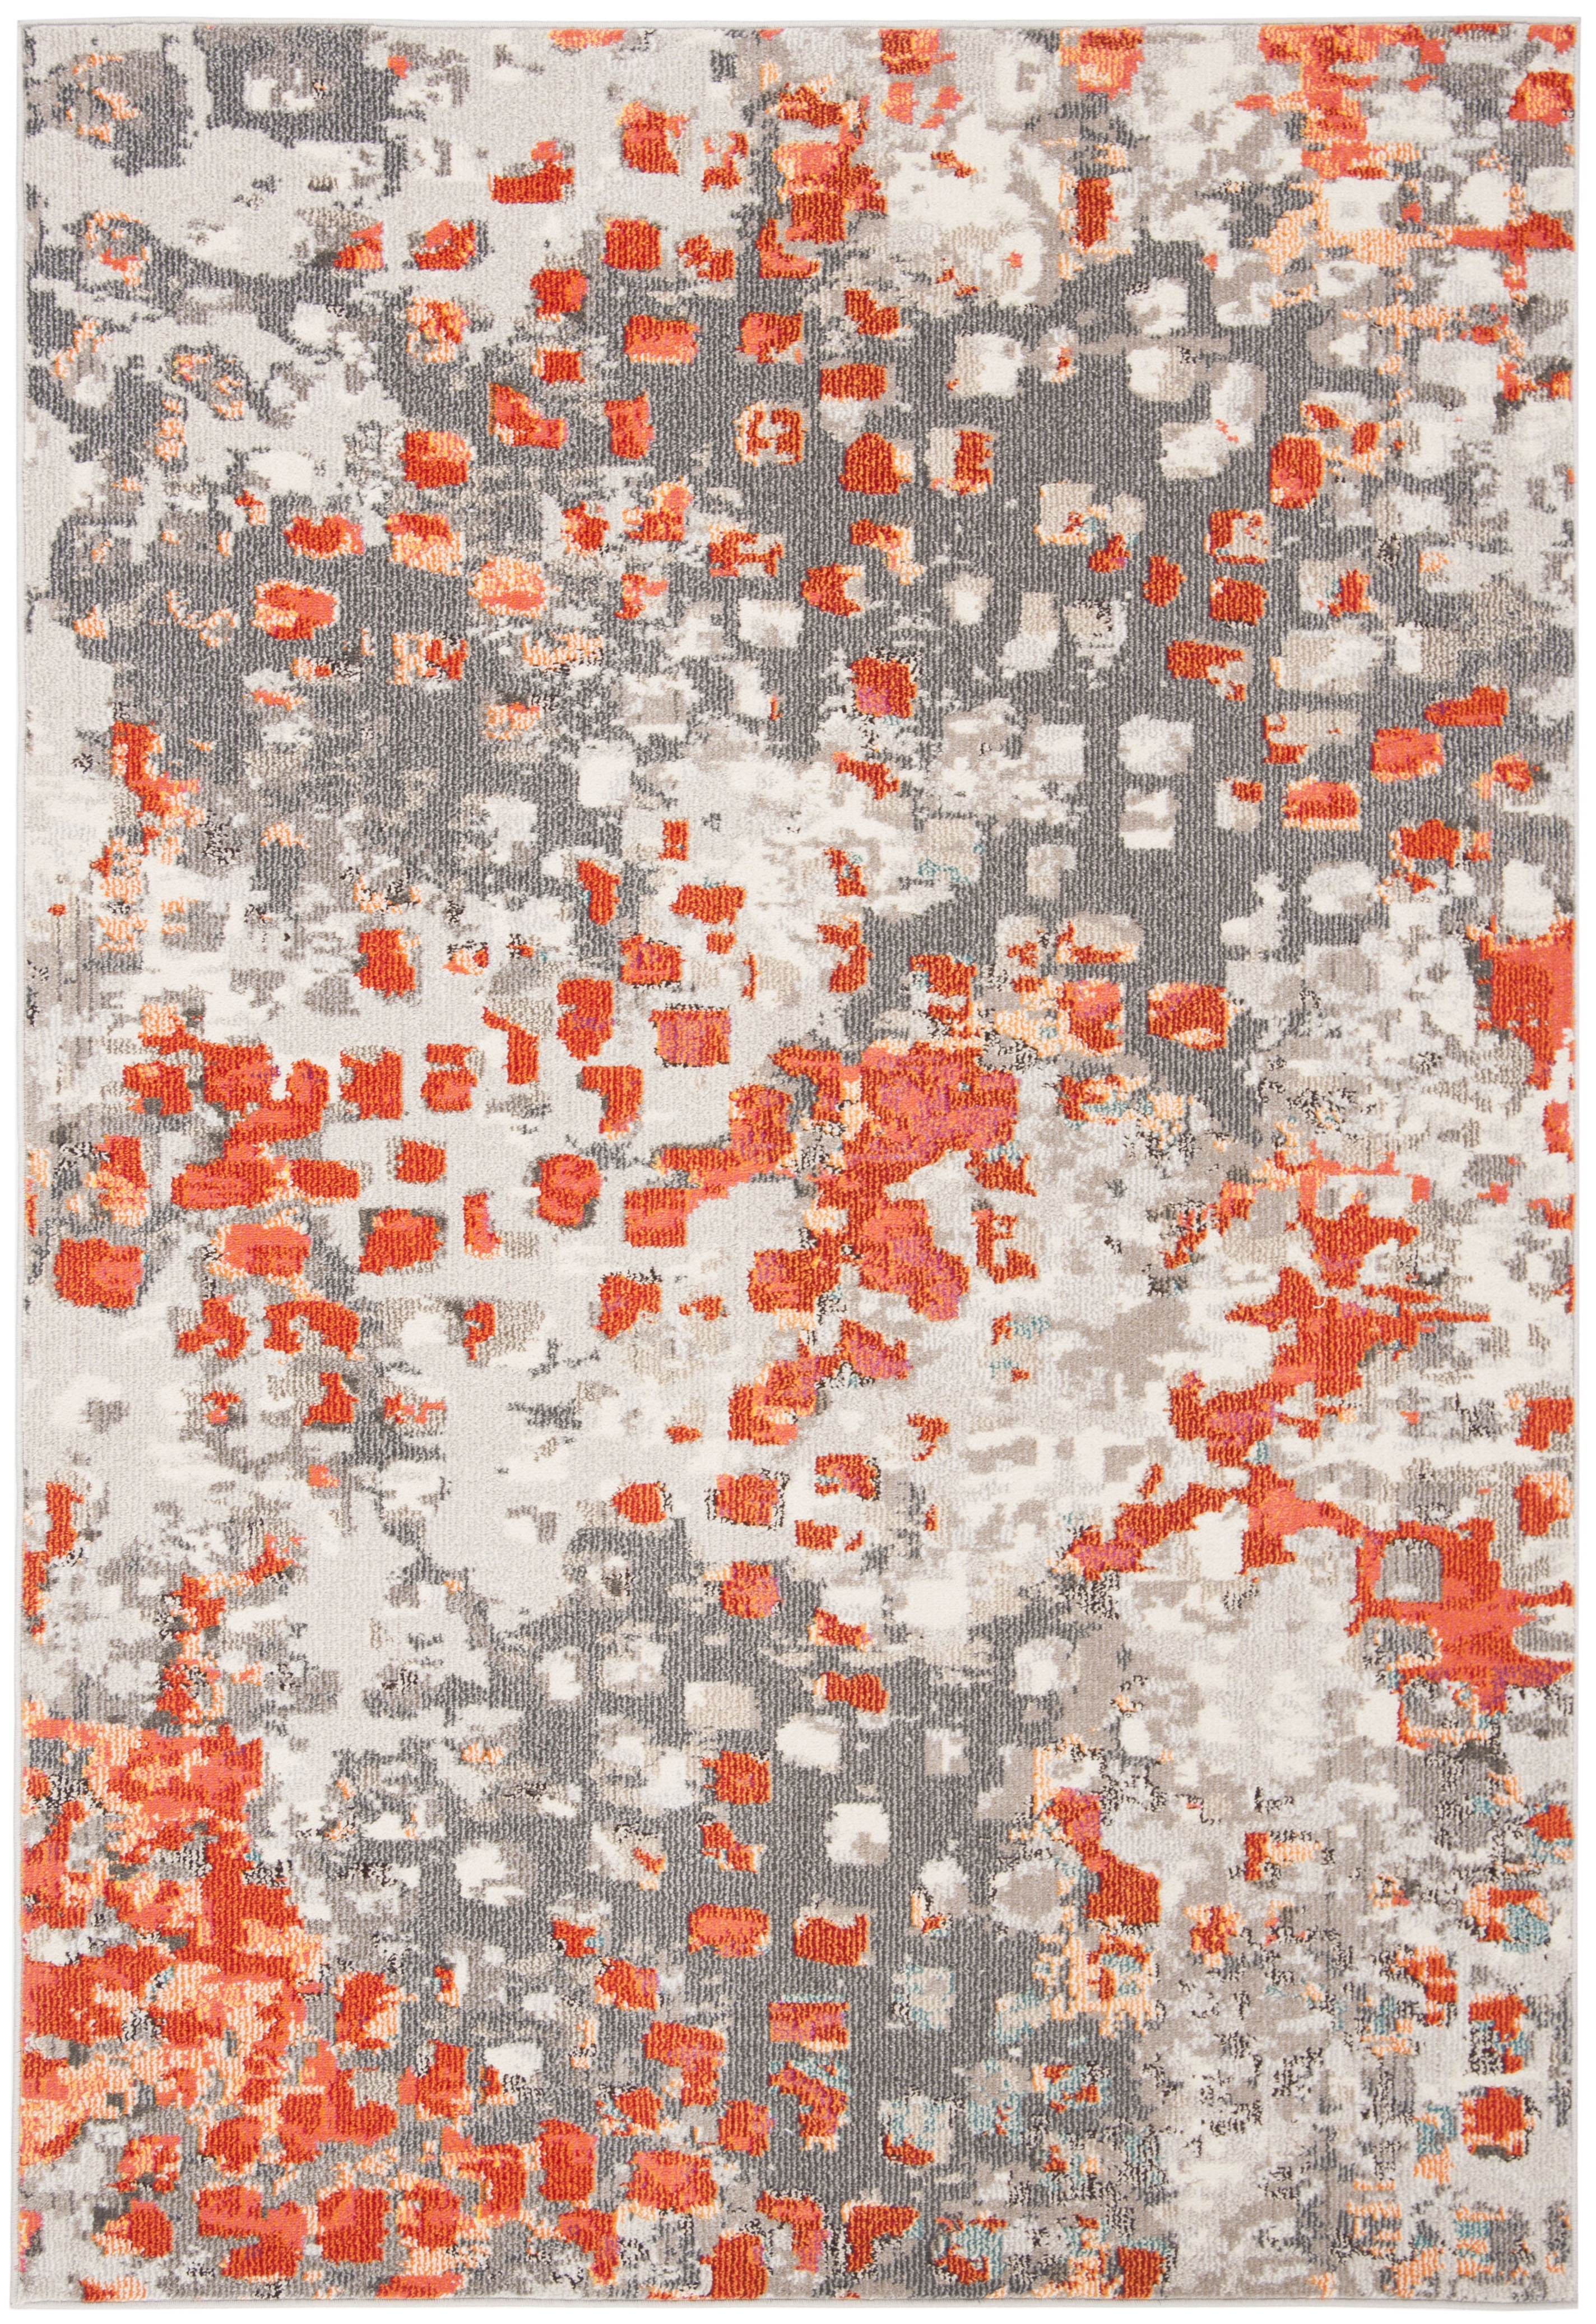 SAFAVIEH Madison Candelario Abstract Polka Dots Area Rug, Grey/Orange, 6' x 9' - image 1 of 9